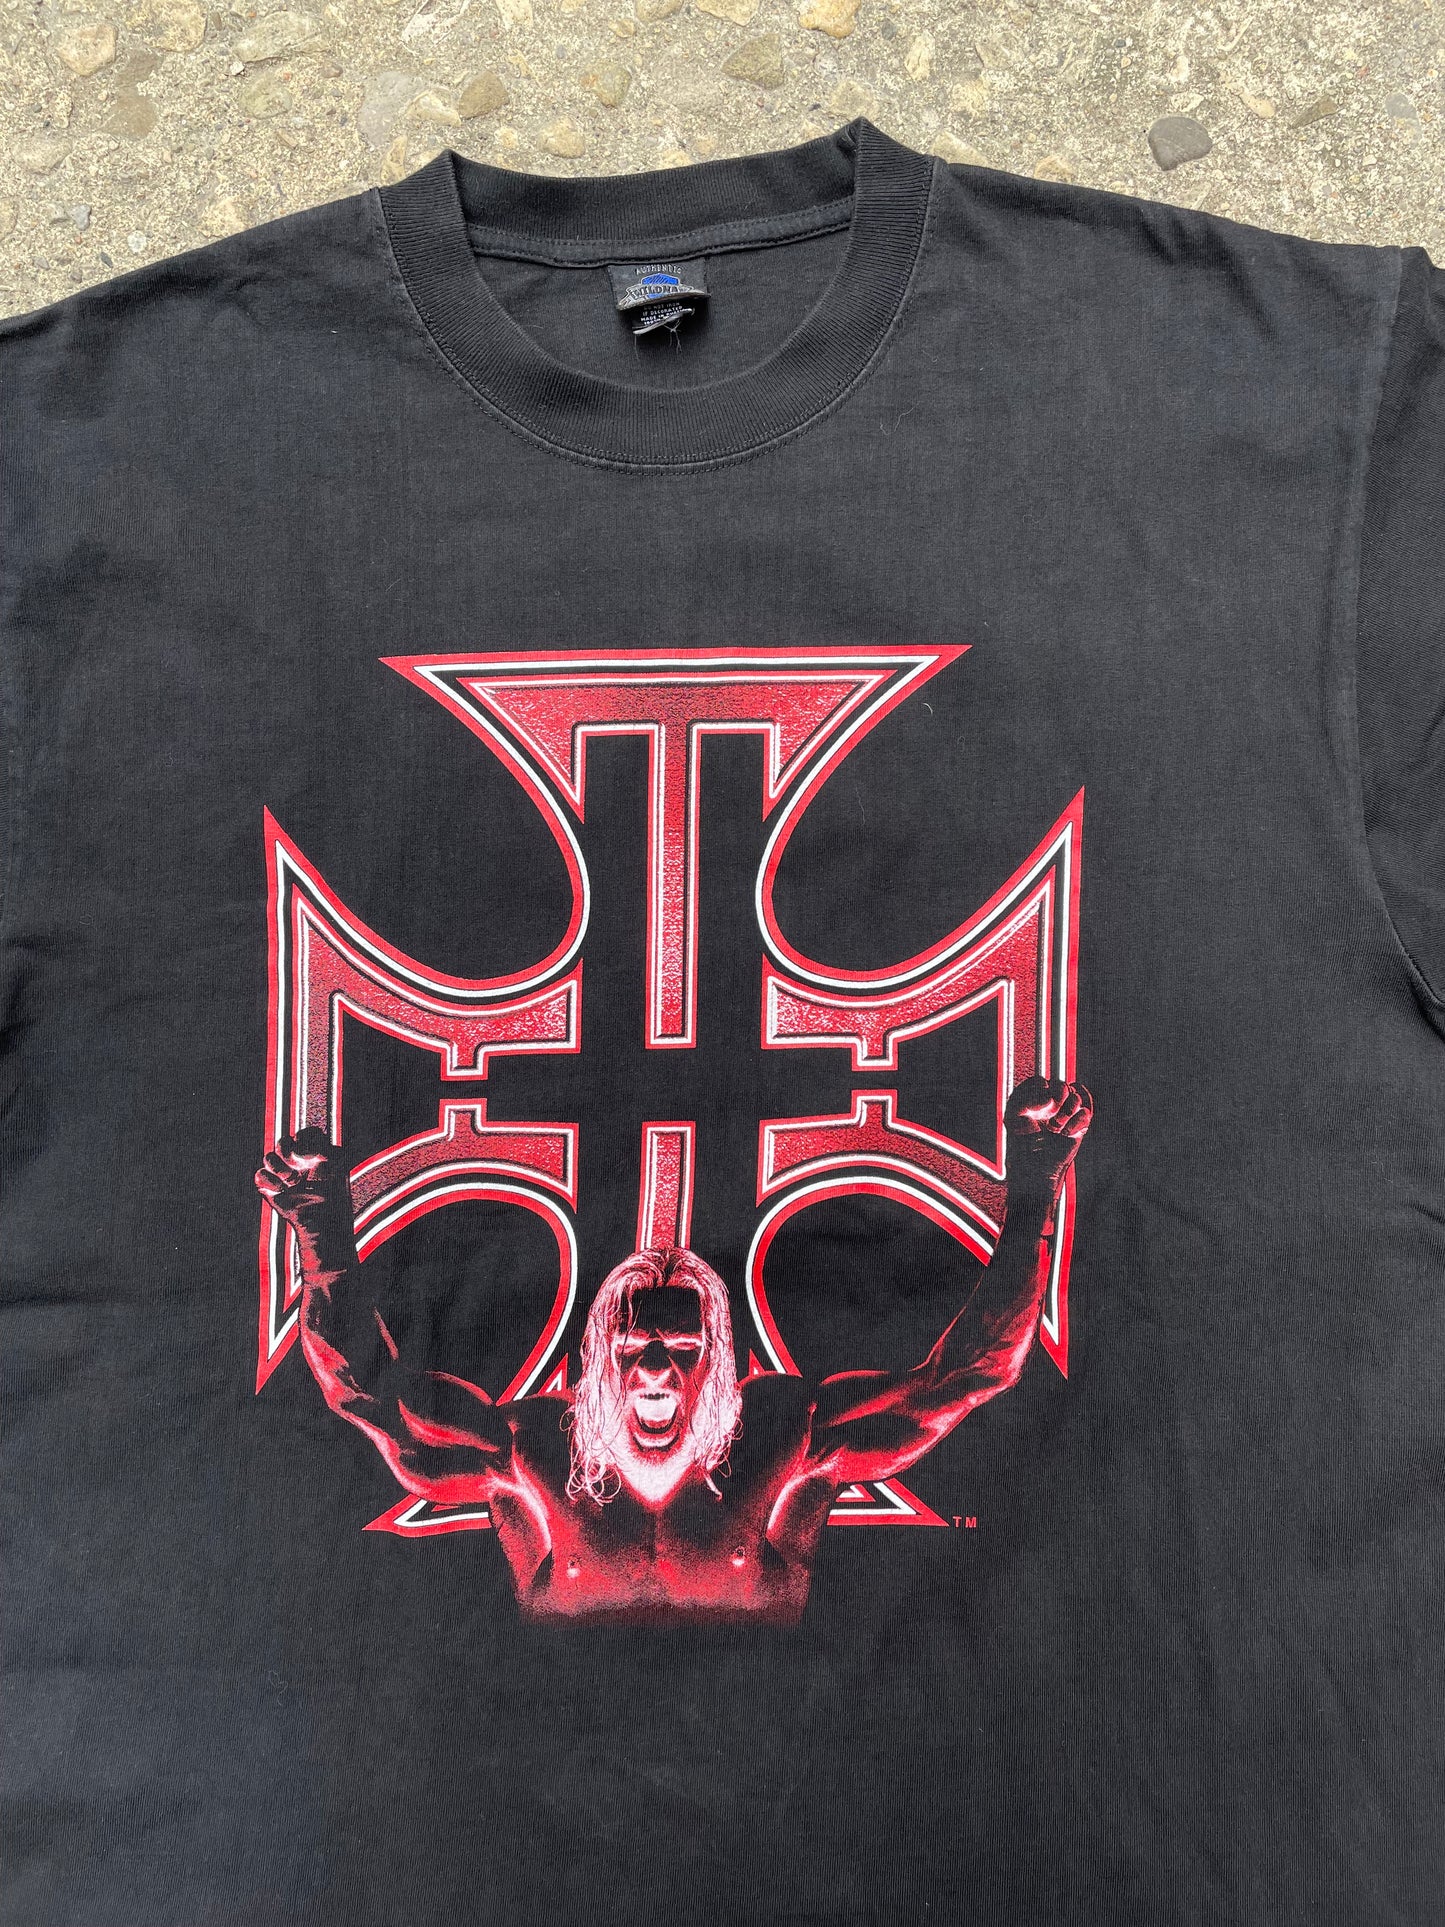 2002 WWF Triple H 'Screw The Rules' Wrestling T-Shirt - XL